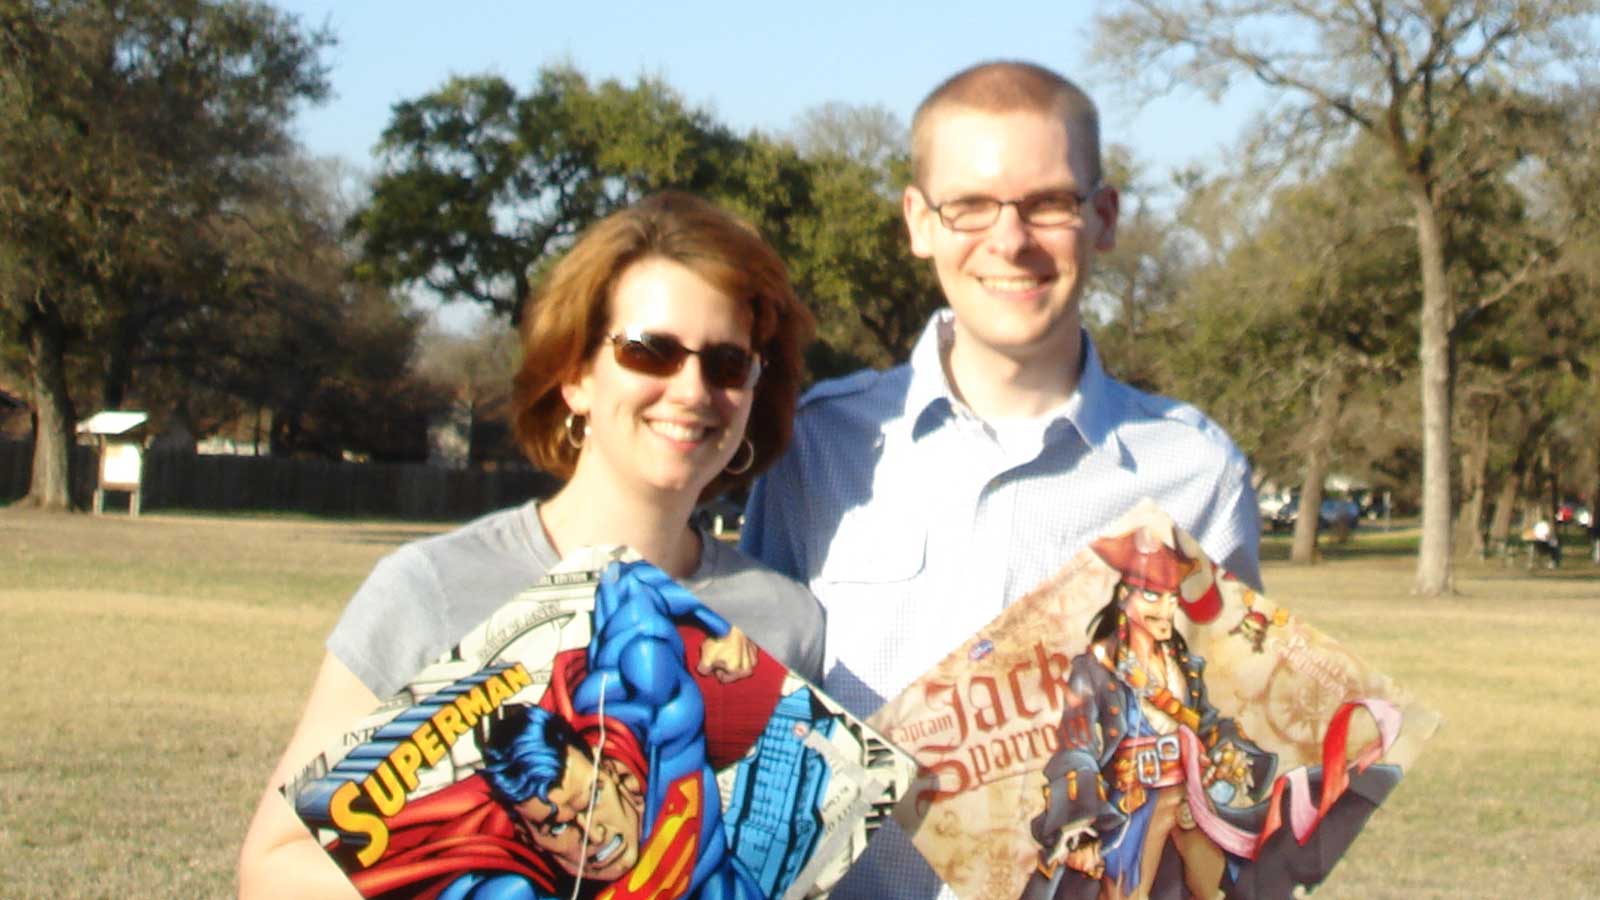 Rebecca and William holding kites